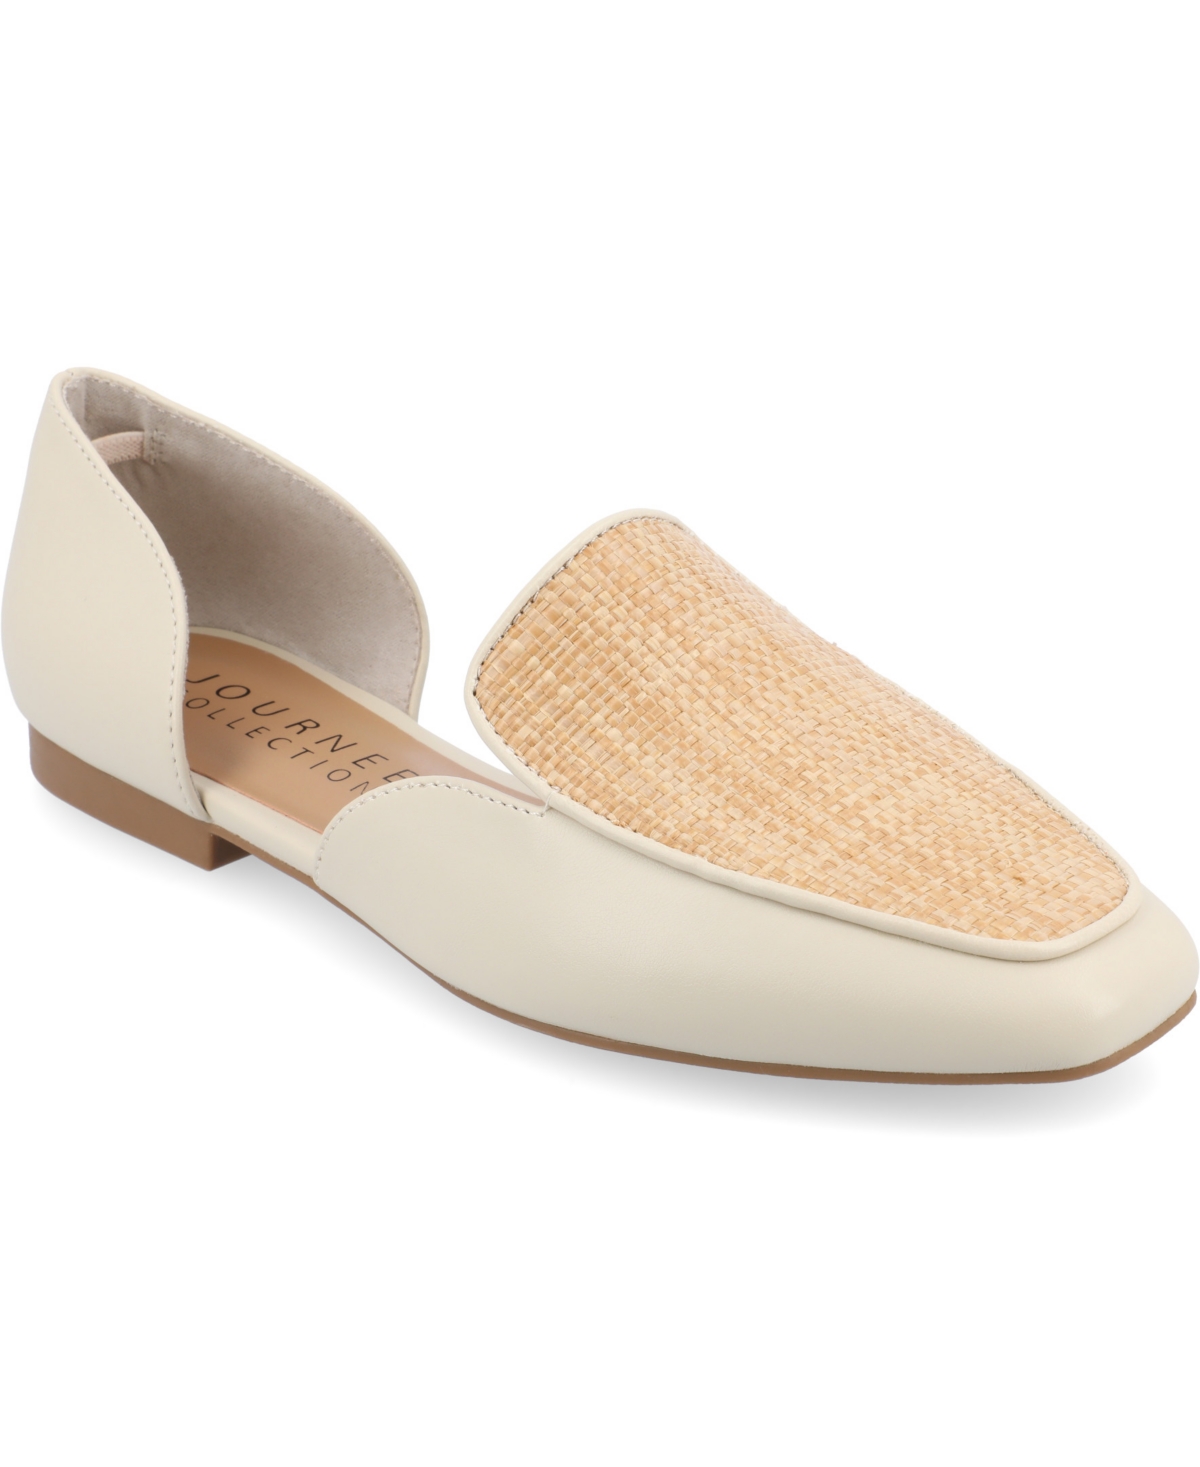 Women's Kennza Tru Comfort Cut Out Slip On Loafers - Tan